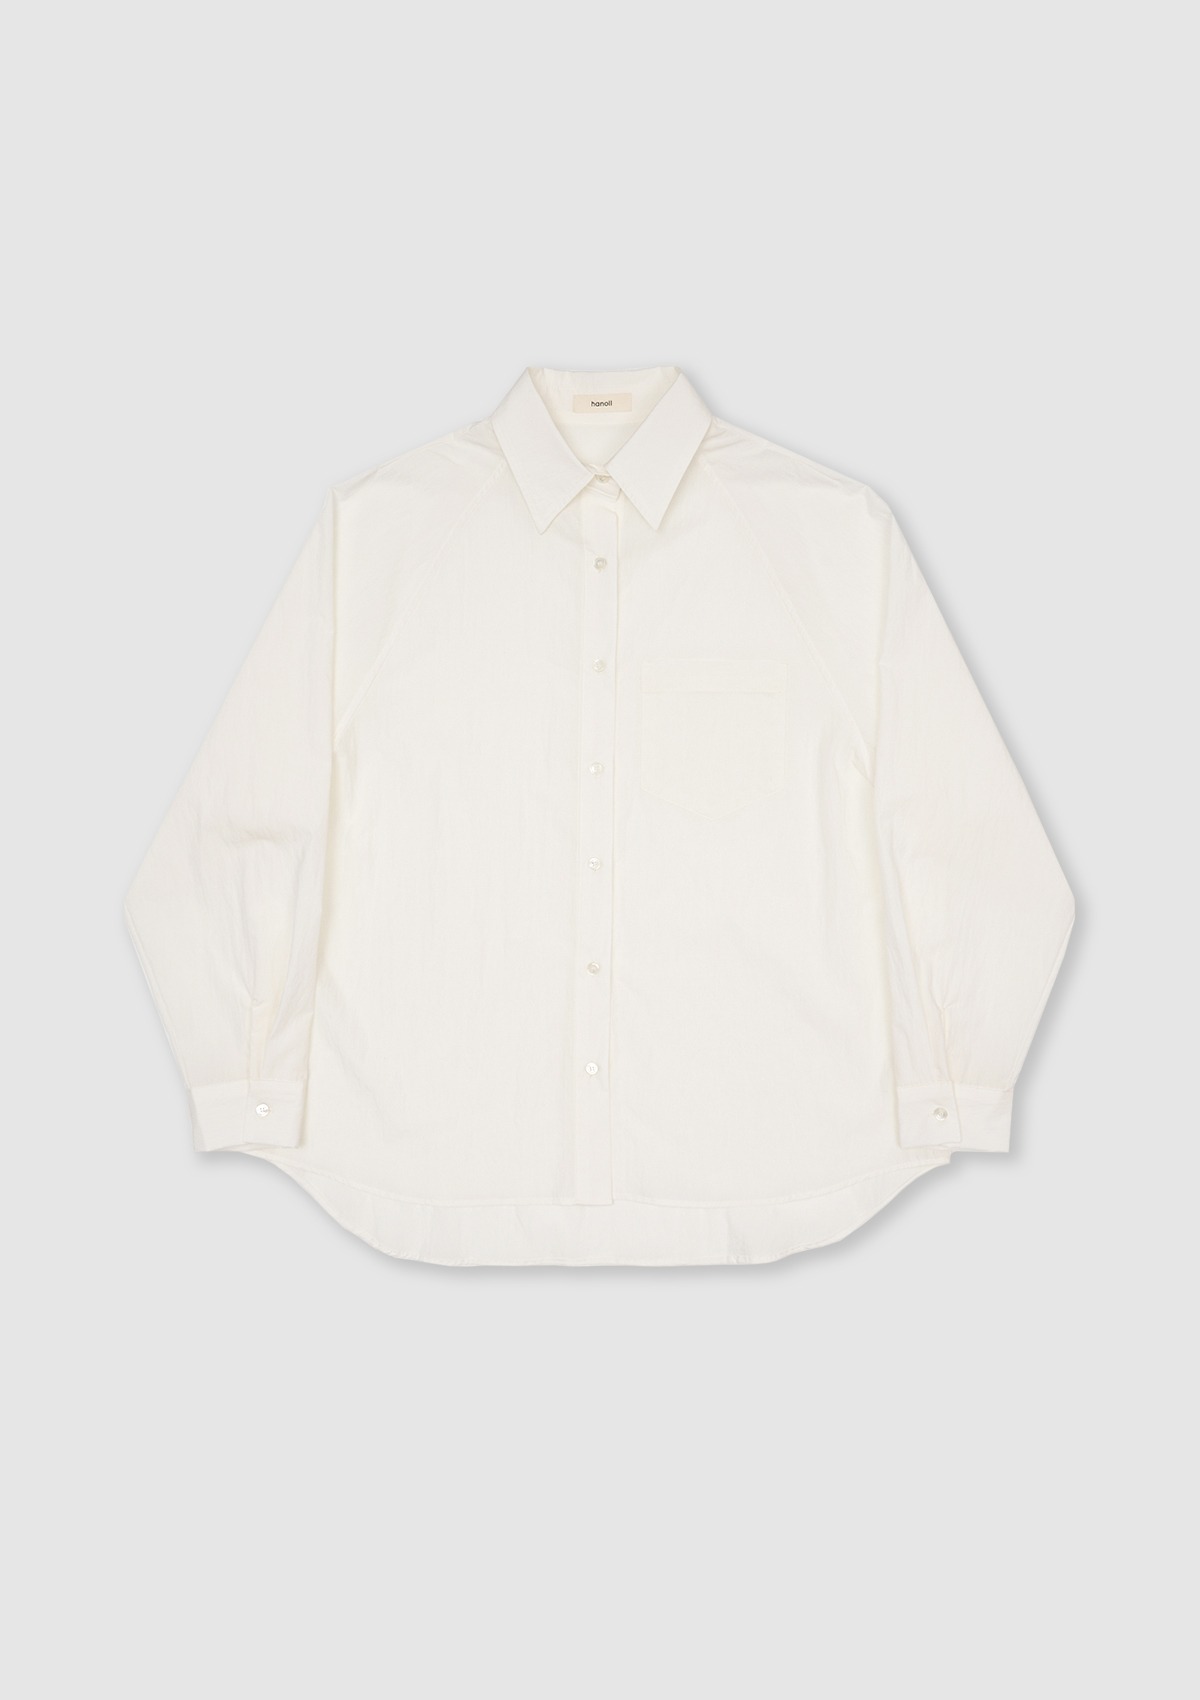 Raglan Shirt (Ivory)